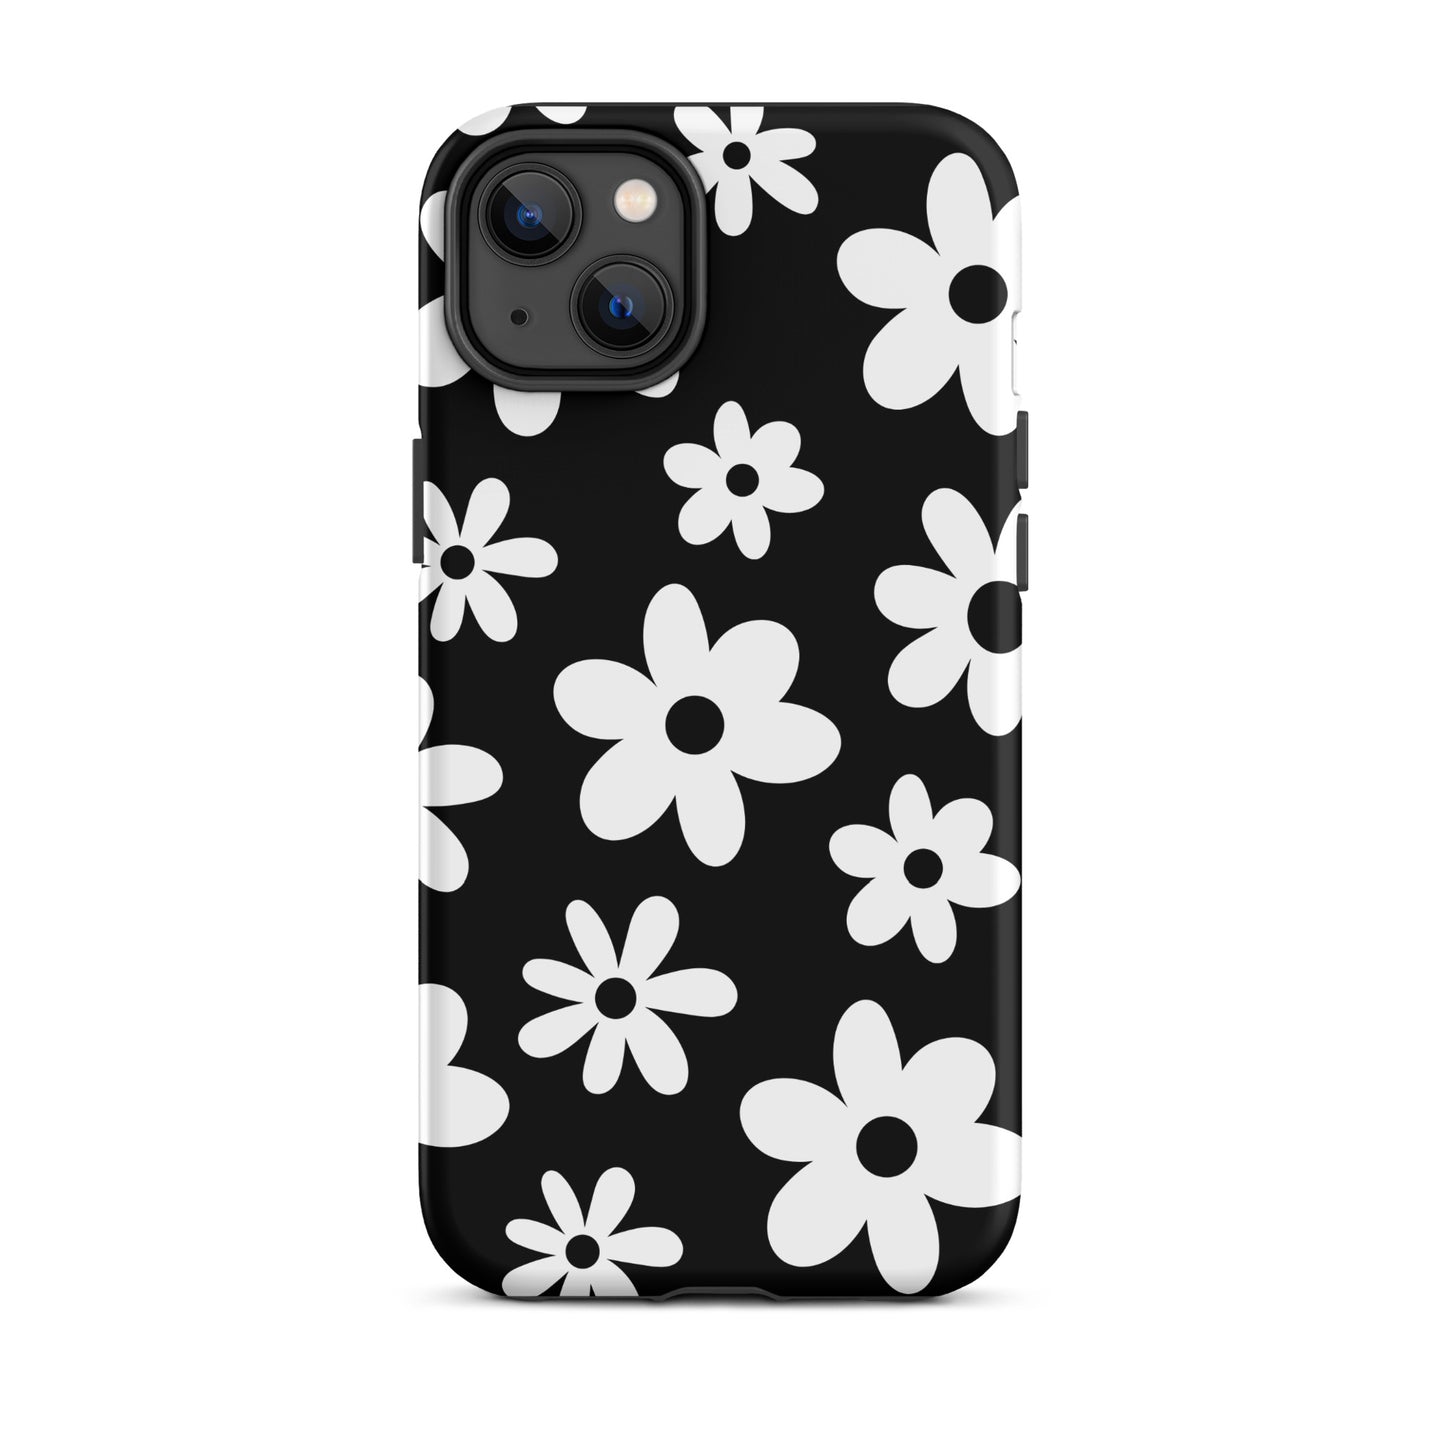 Black Flower Power iPhone Case